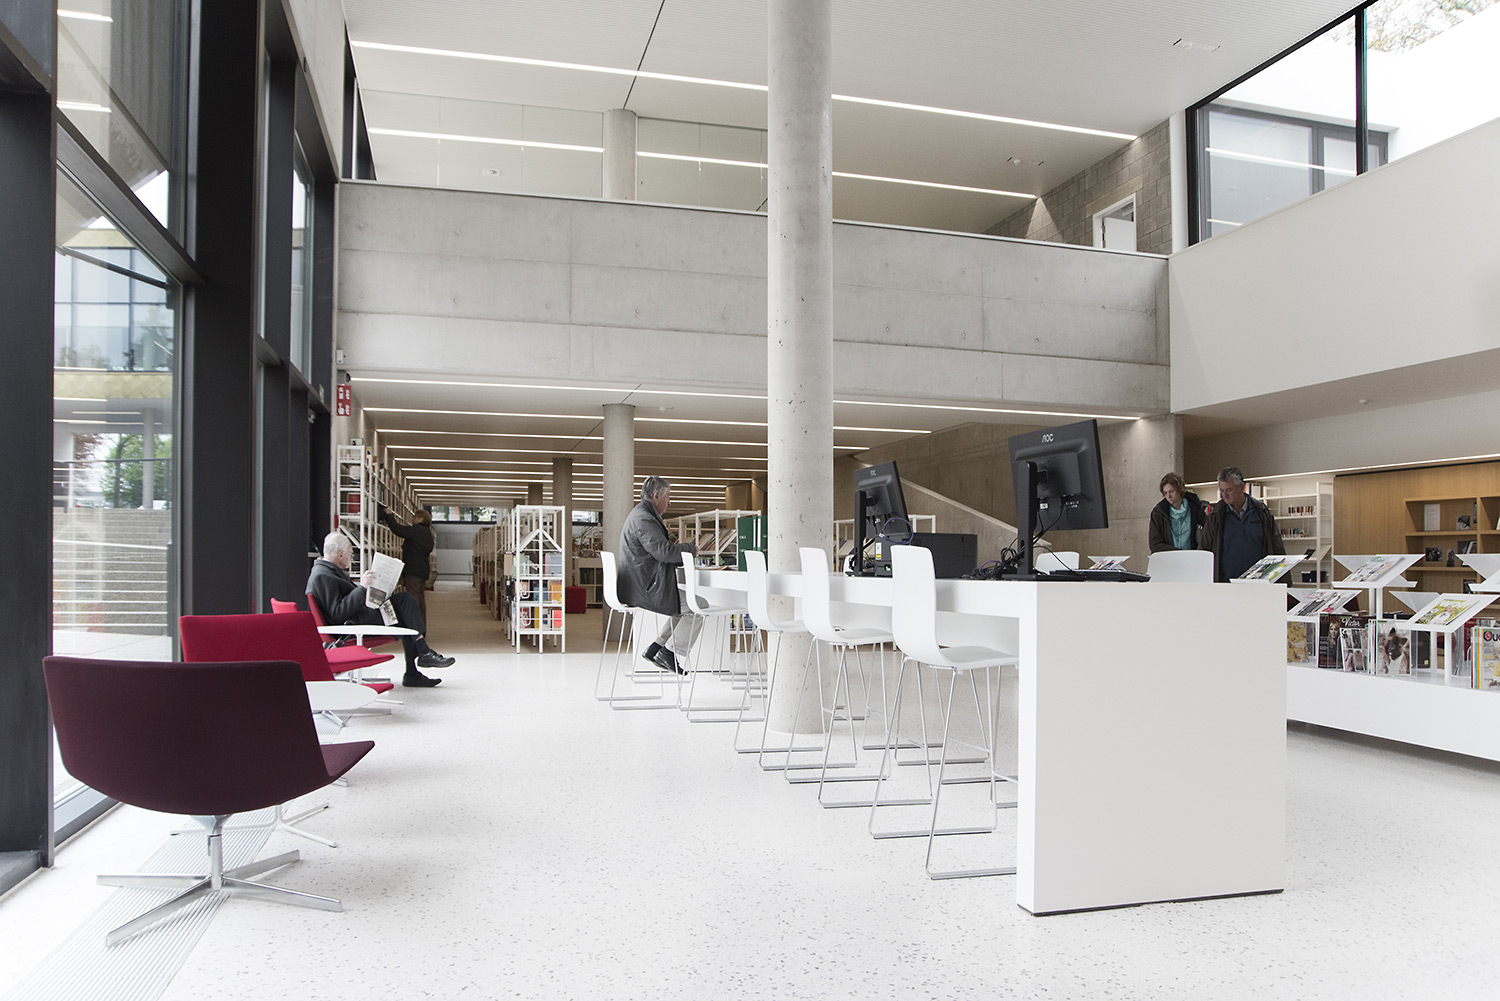 De Factorij – Cultural Center and Library in Zaventem